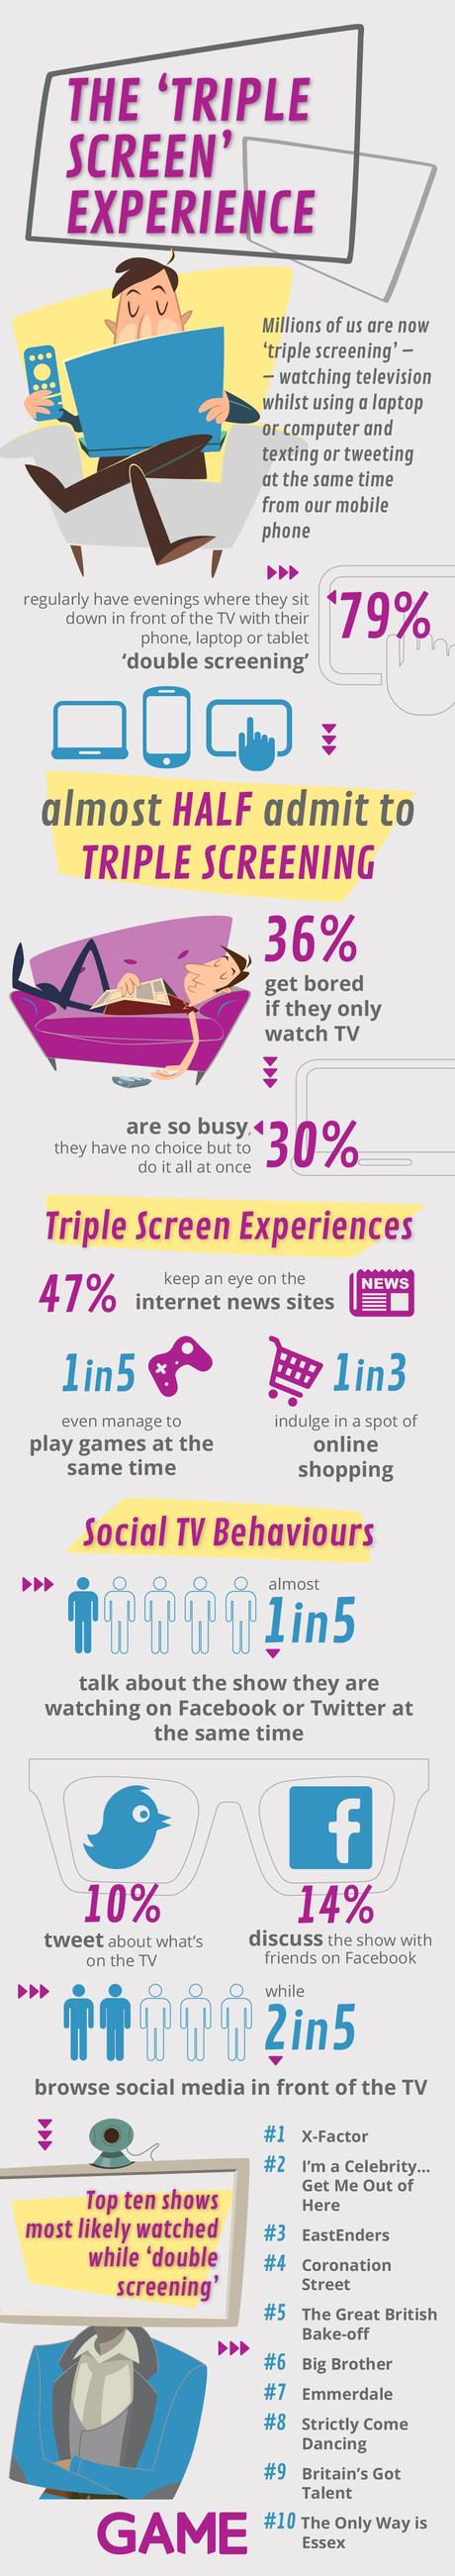 GAME triple screening infographic